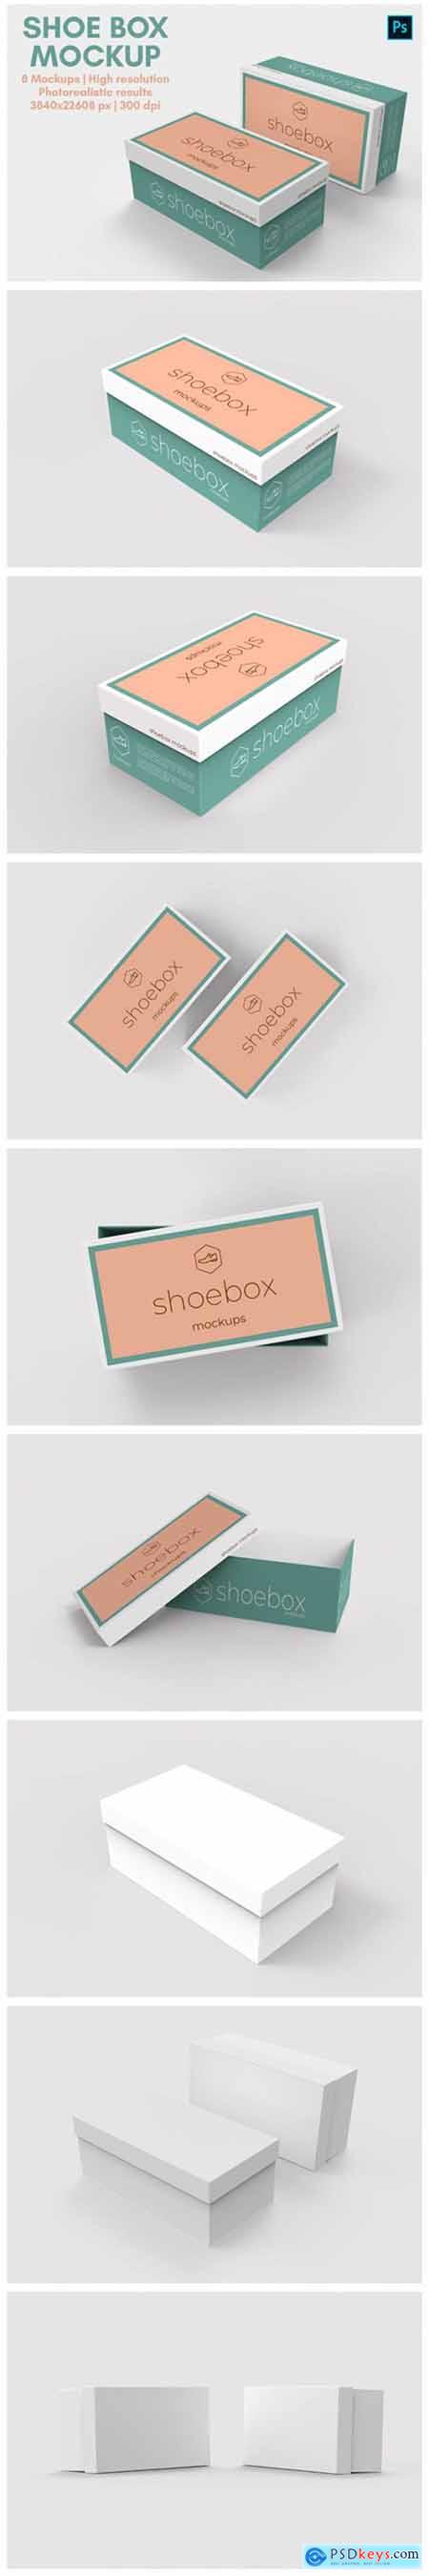 Shoe Box Mockup - 8 Views 3727188